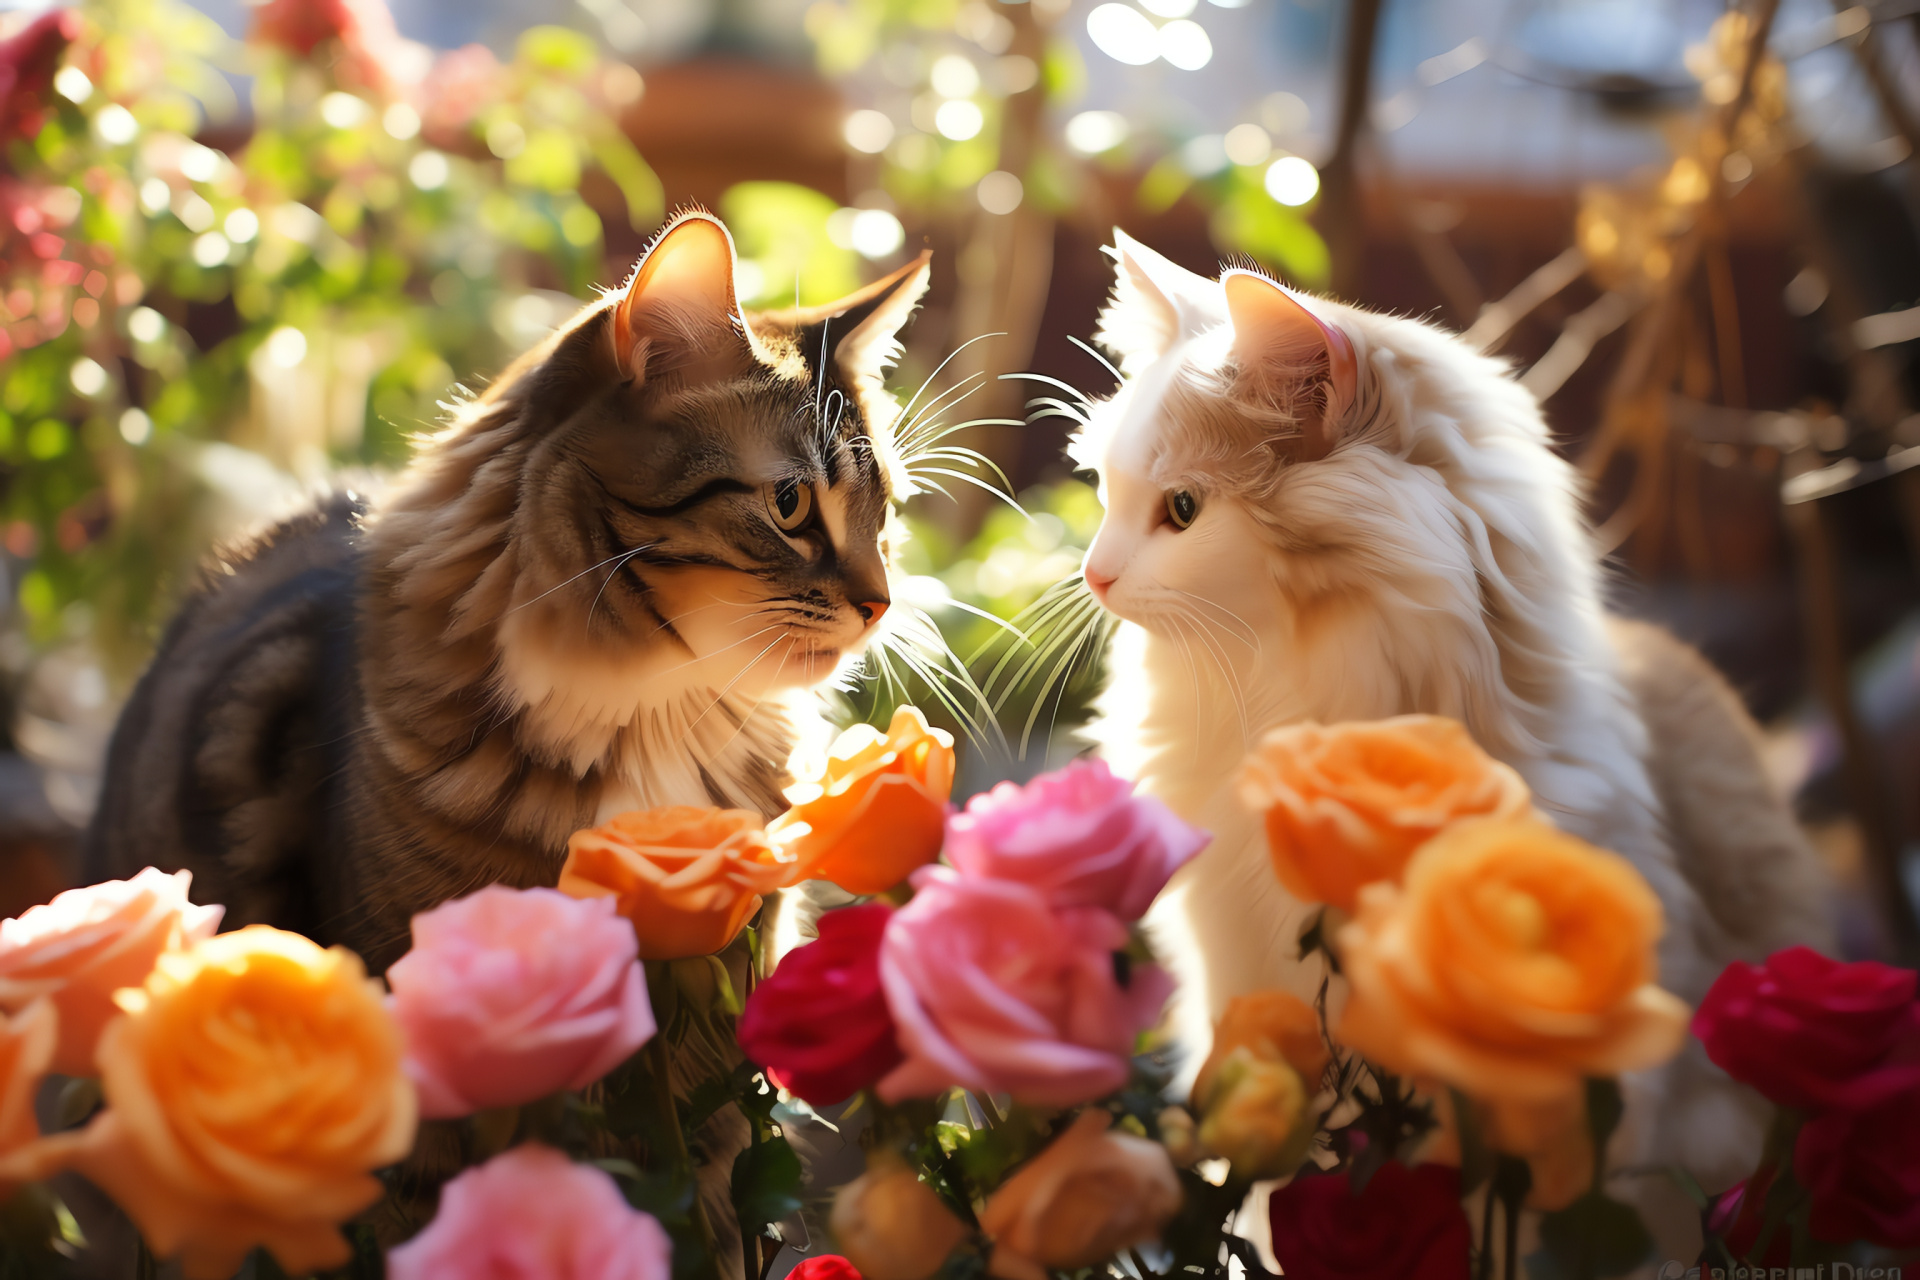 Garden delight for romantic cats, blossoming love among flora, feline fancy attire, Valentine's playful pets, joyful cat companions, HD Desktop Wallpaper